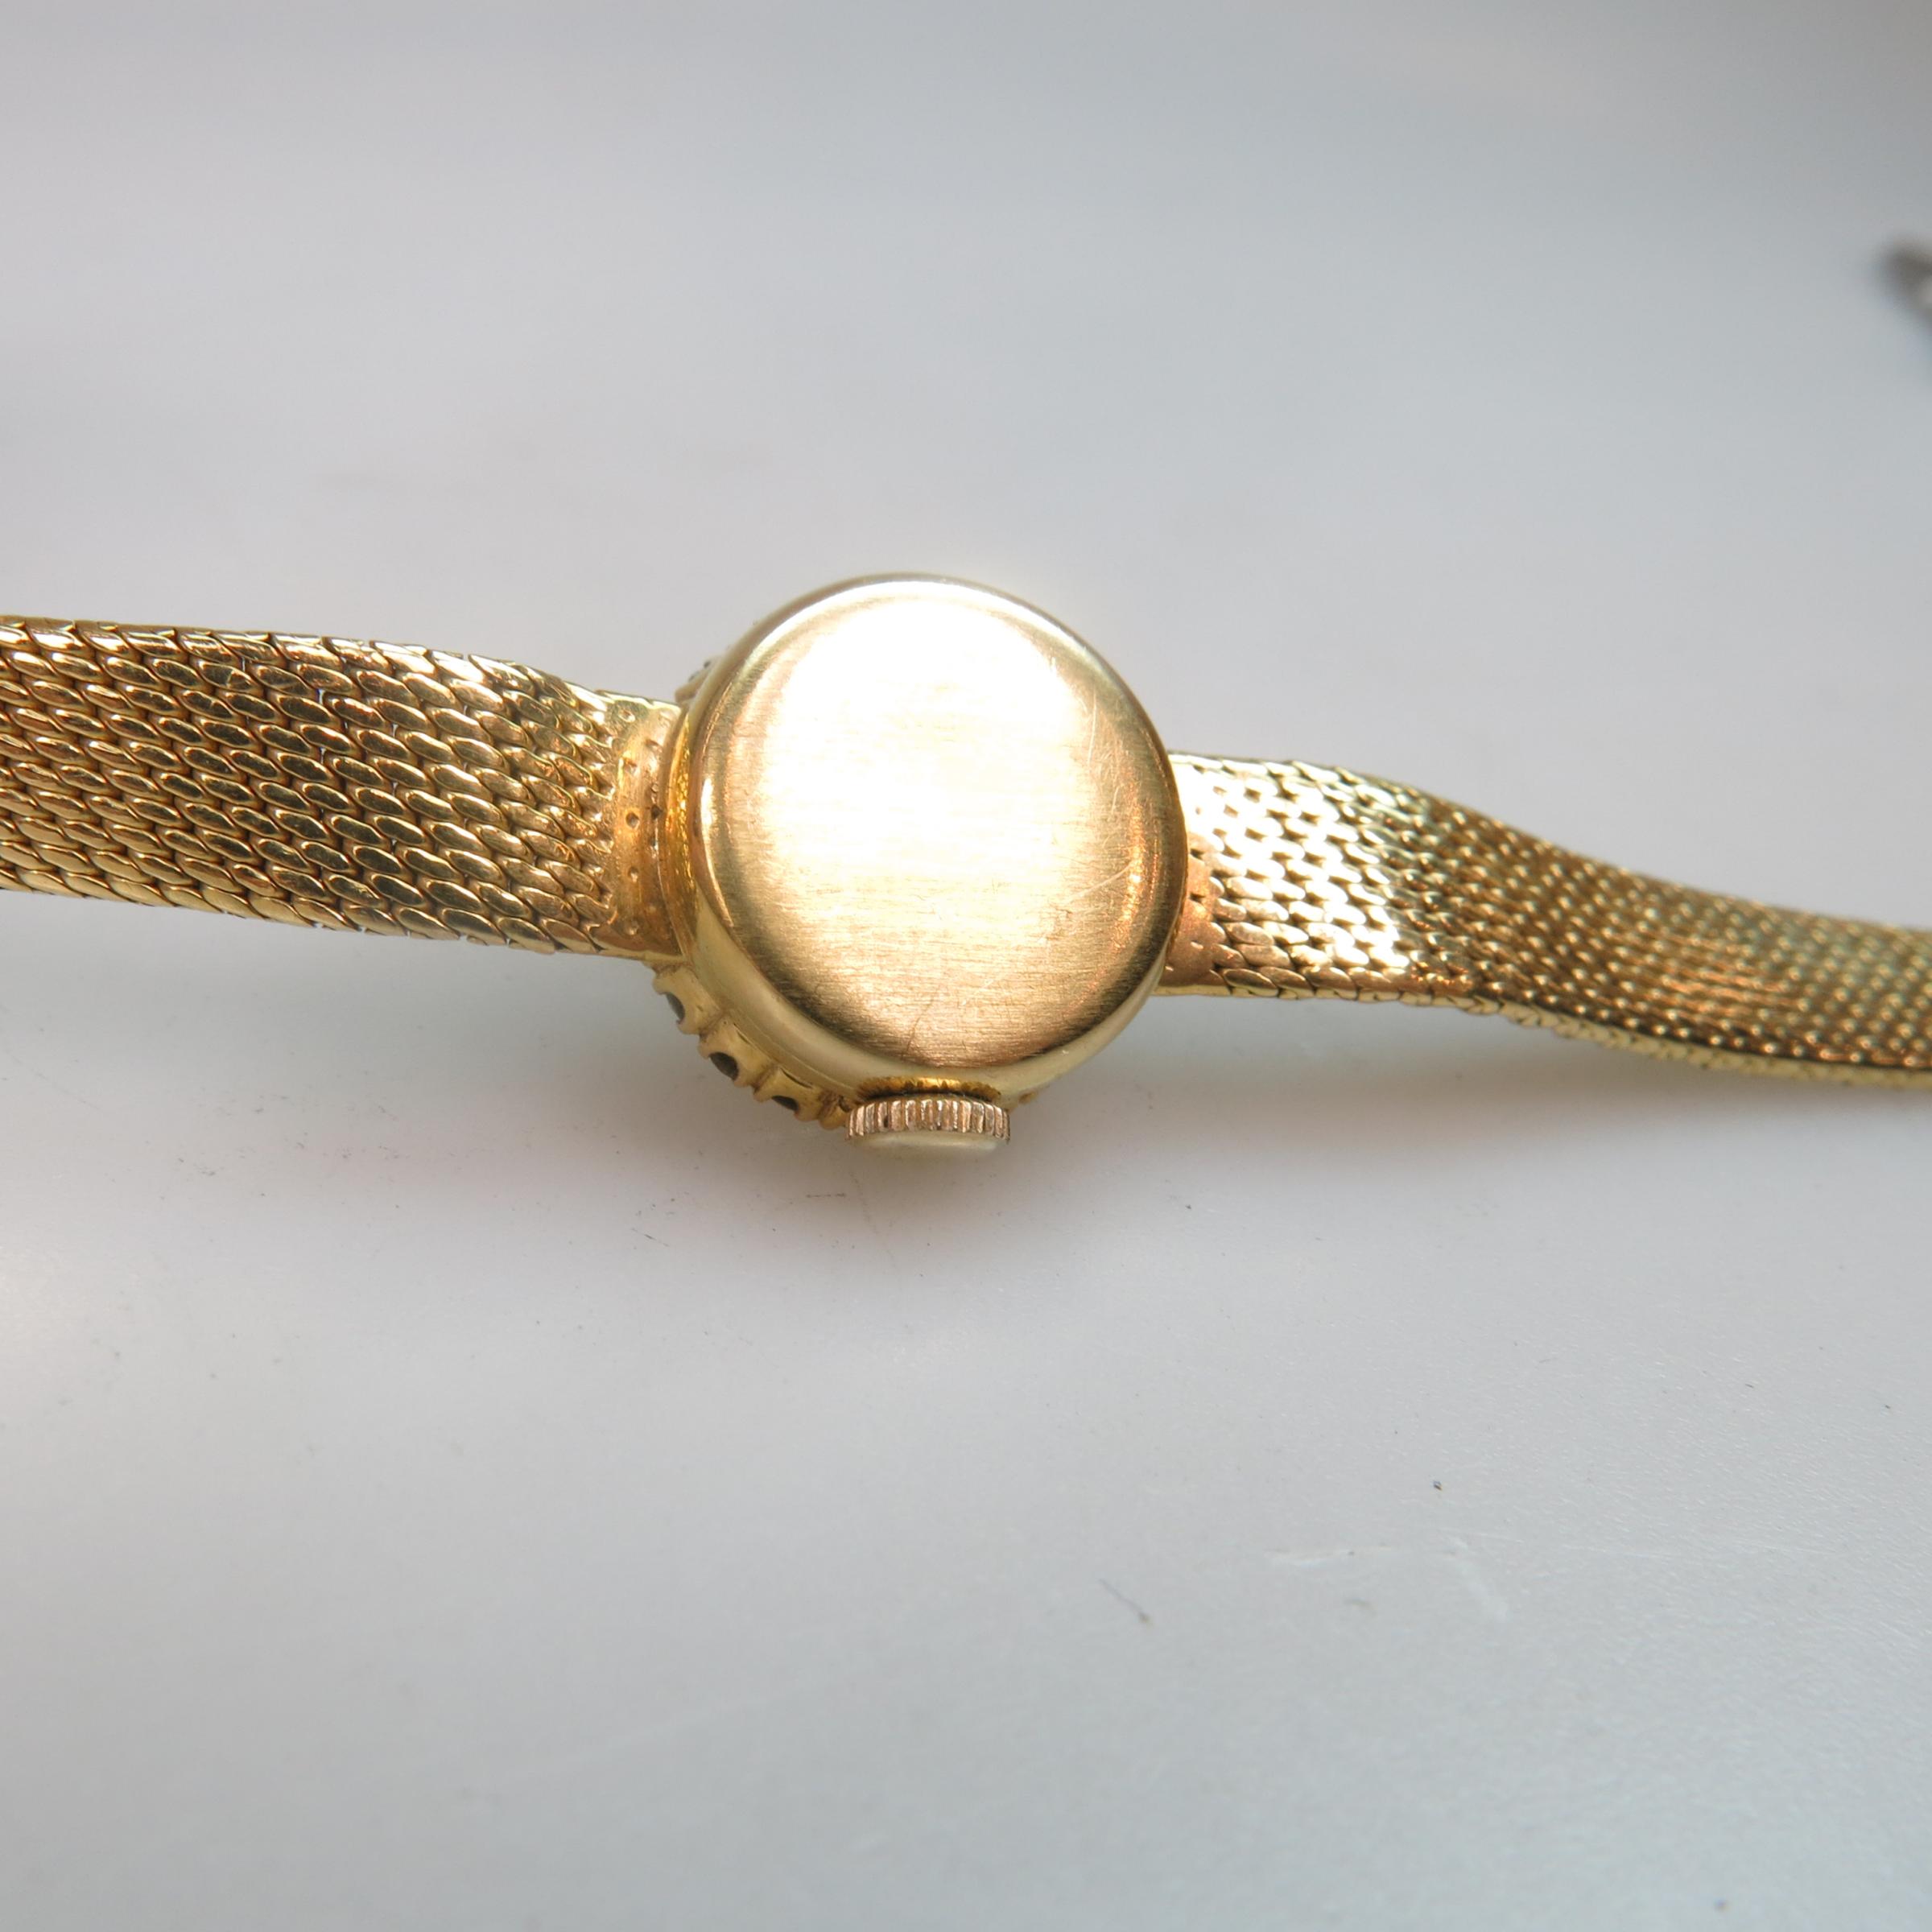 Lady's Girard-Perregaux Wristwatch